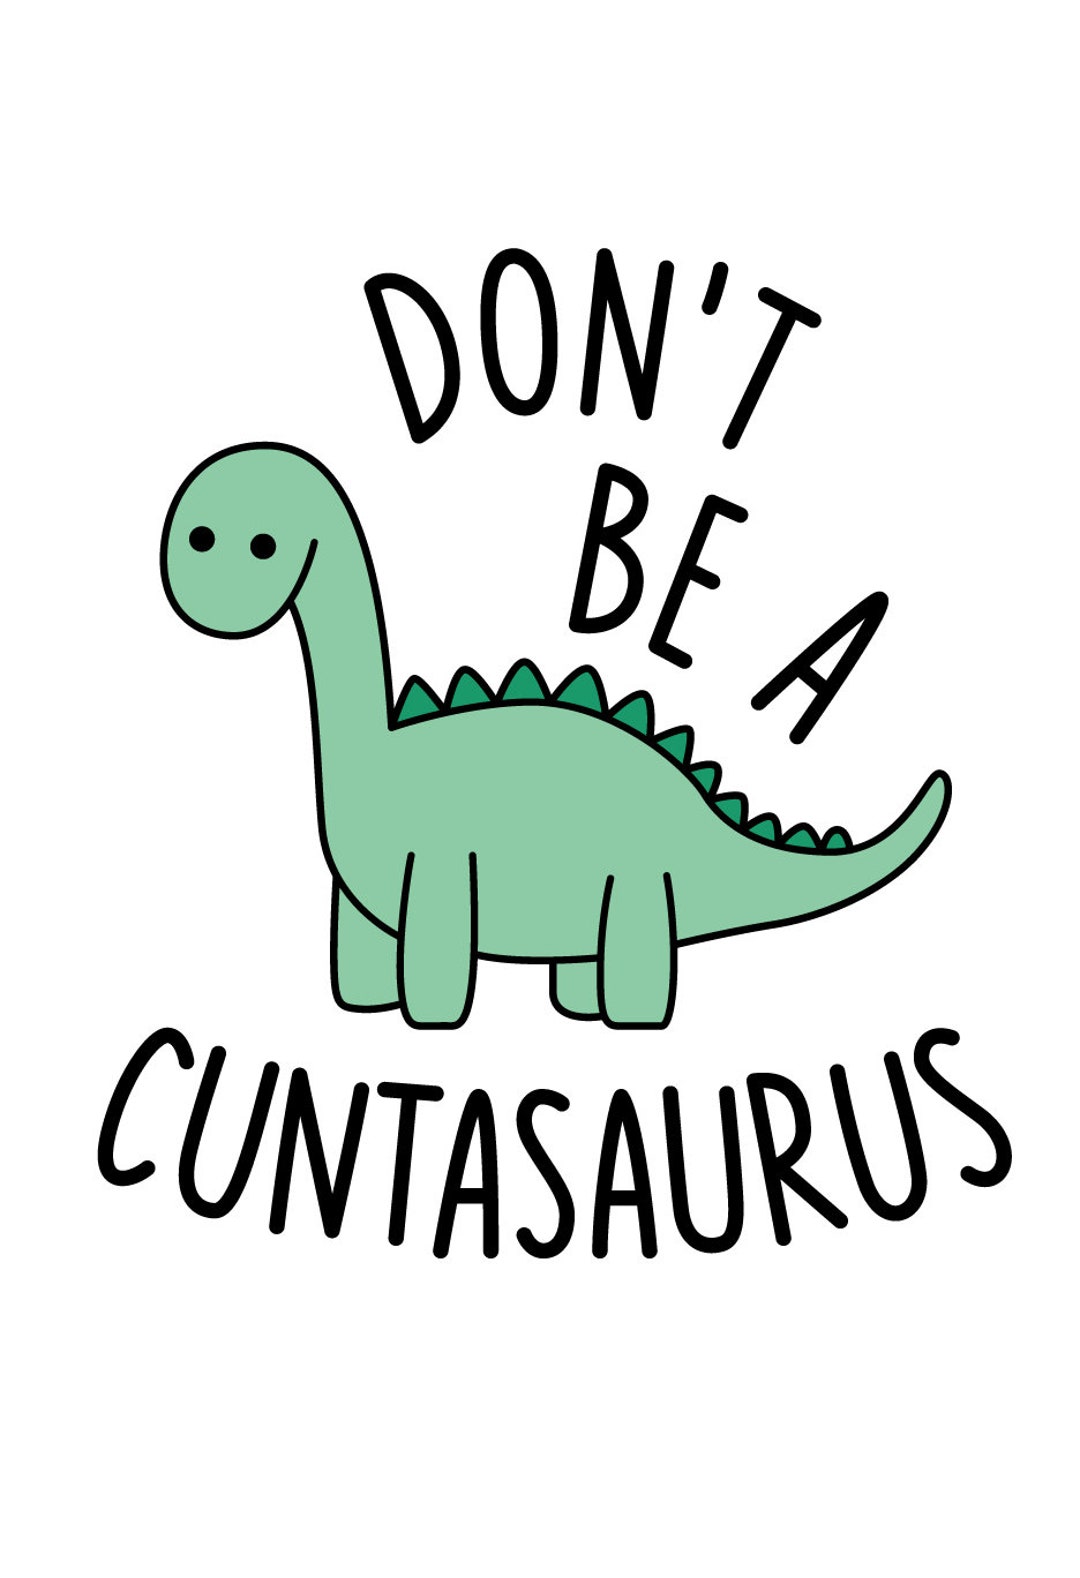 Cuntasaurus - Etsy